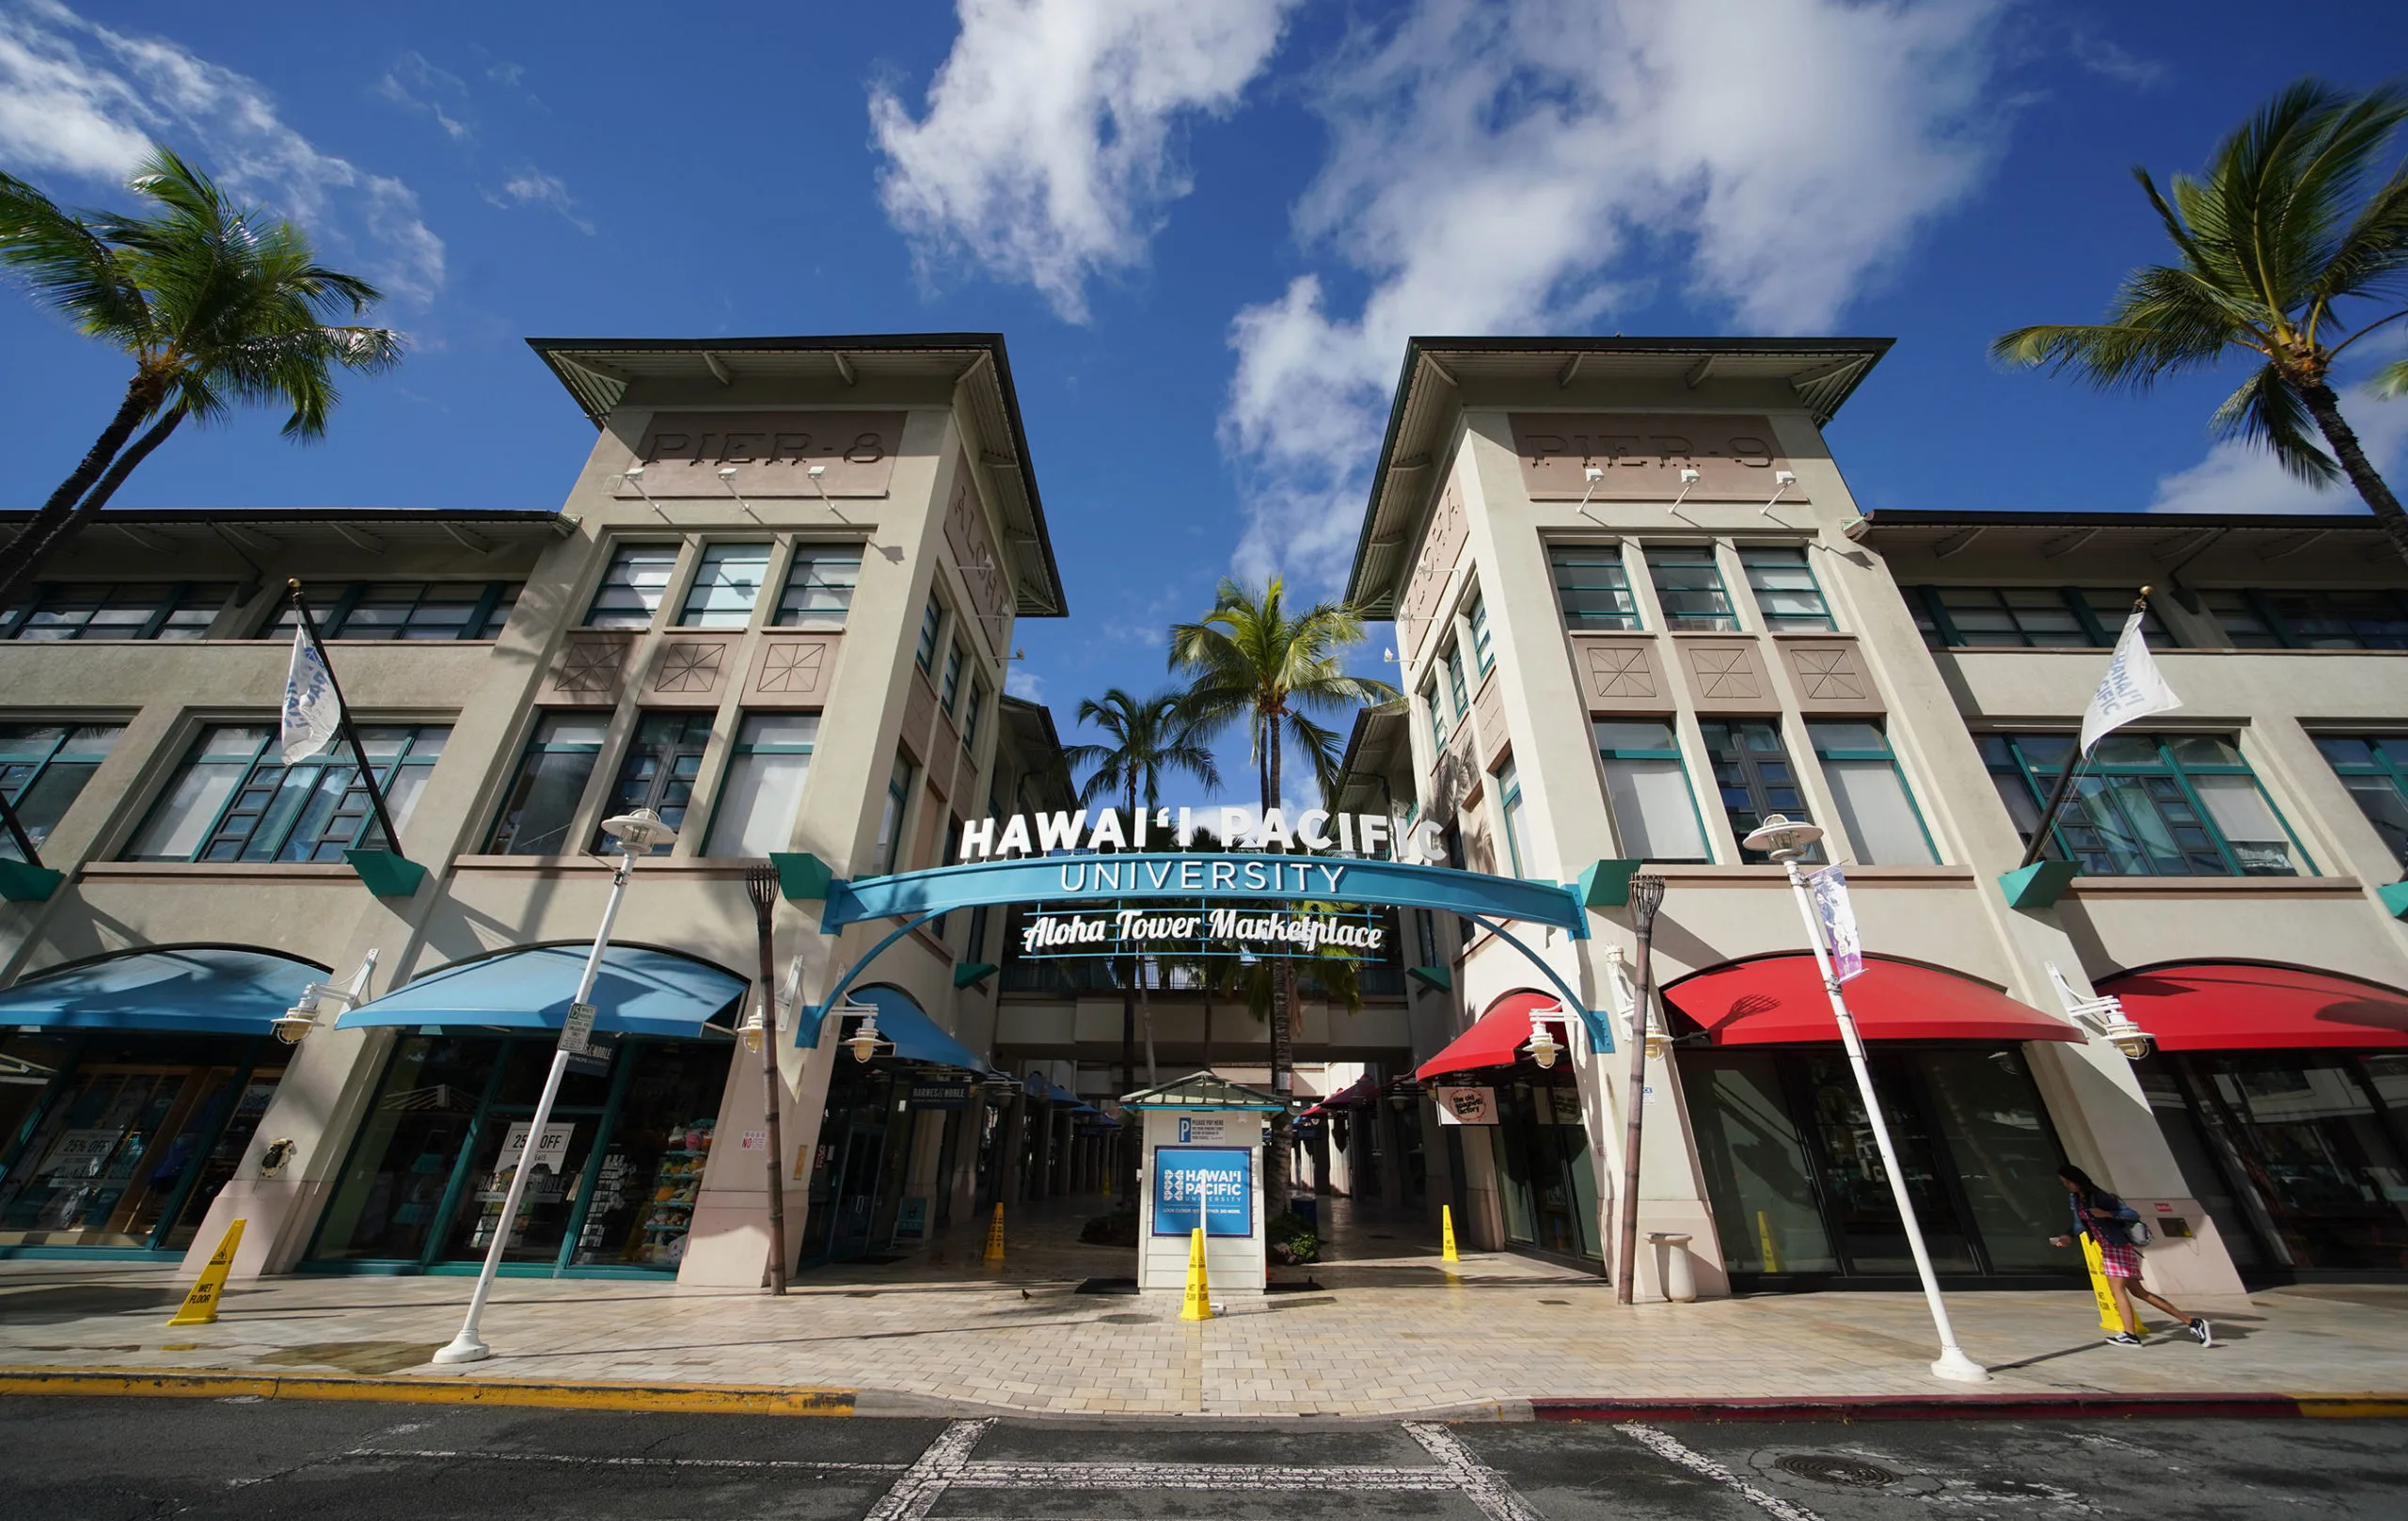 Hawaii Pacific University Aloha Tower Marketplace Front Entrance Scaled 1.webp